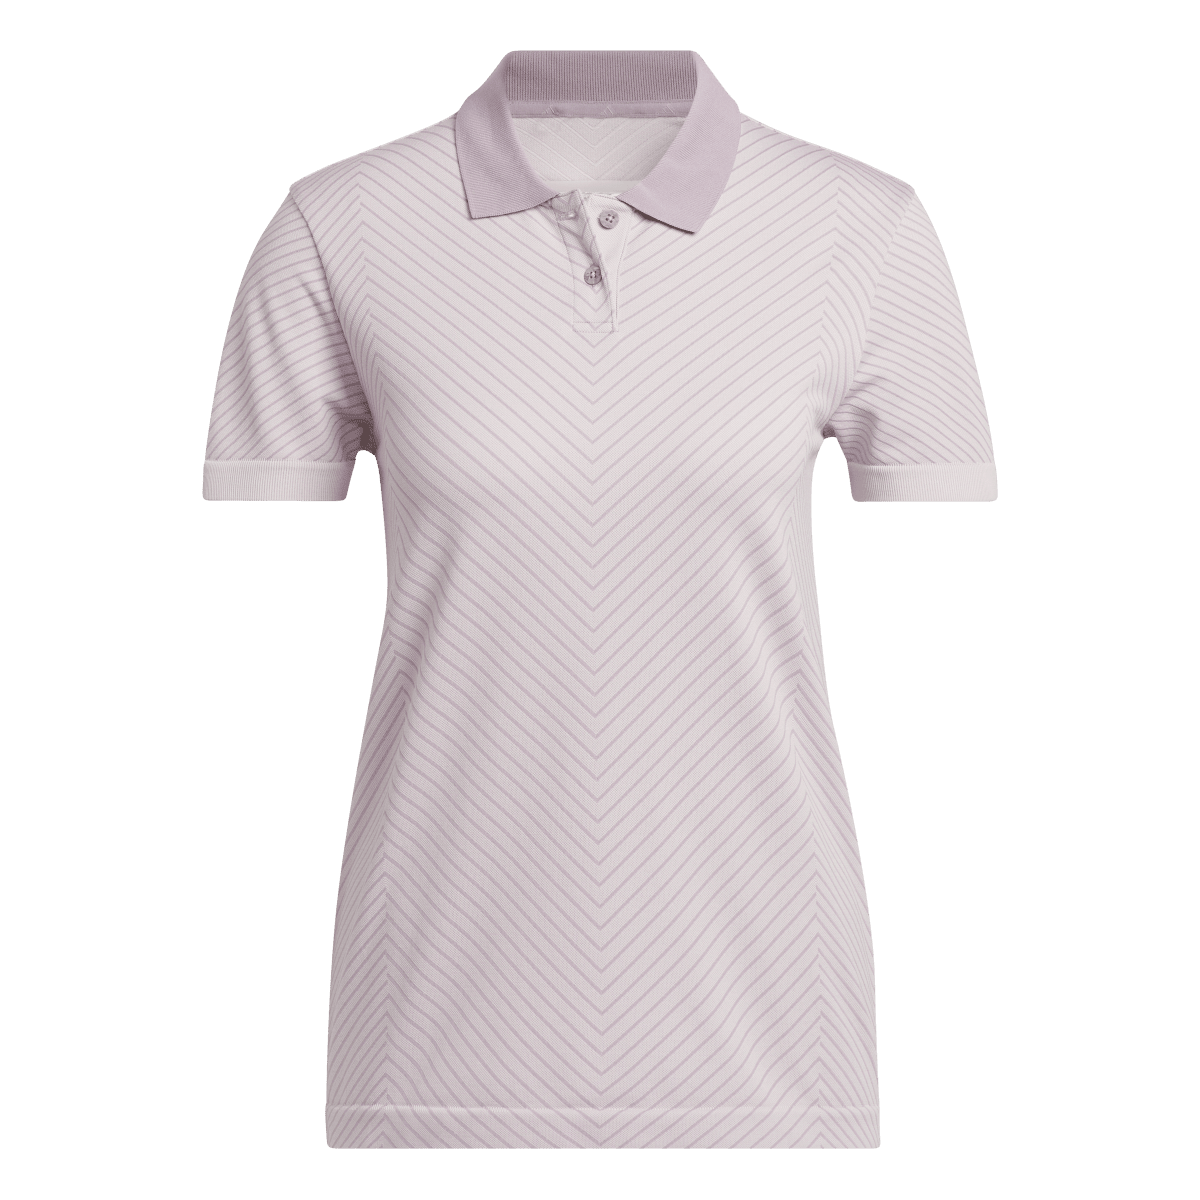 Ultimate365 Tour Primeknit Short Sleeve Polo Shirt